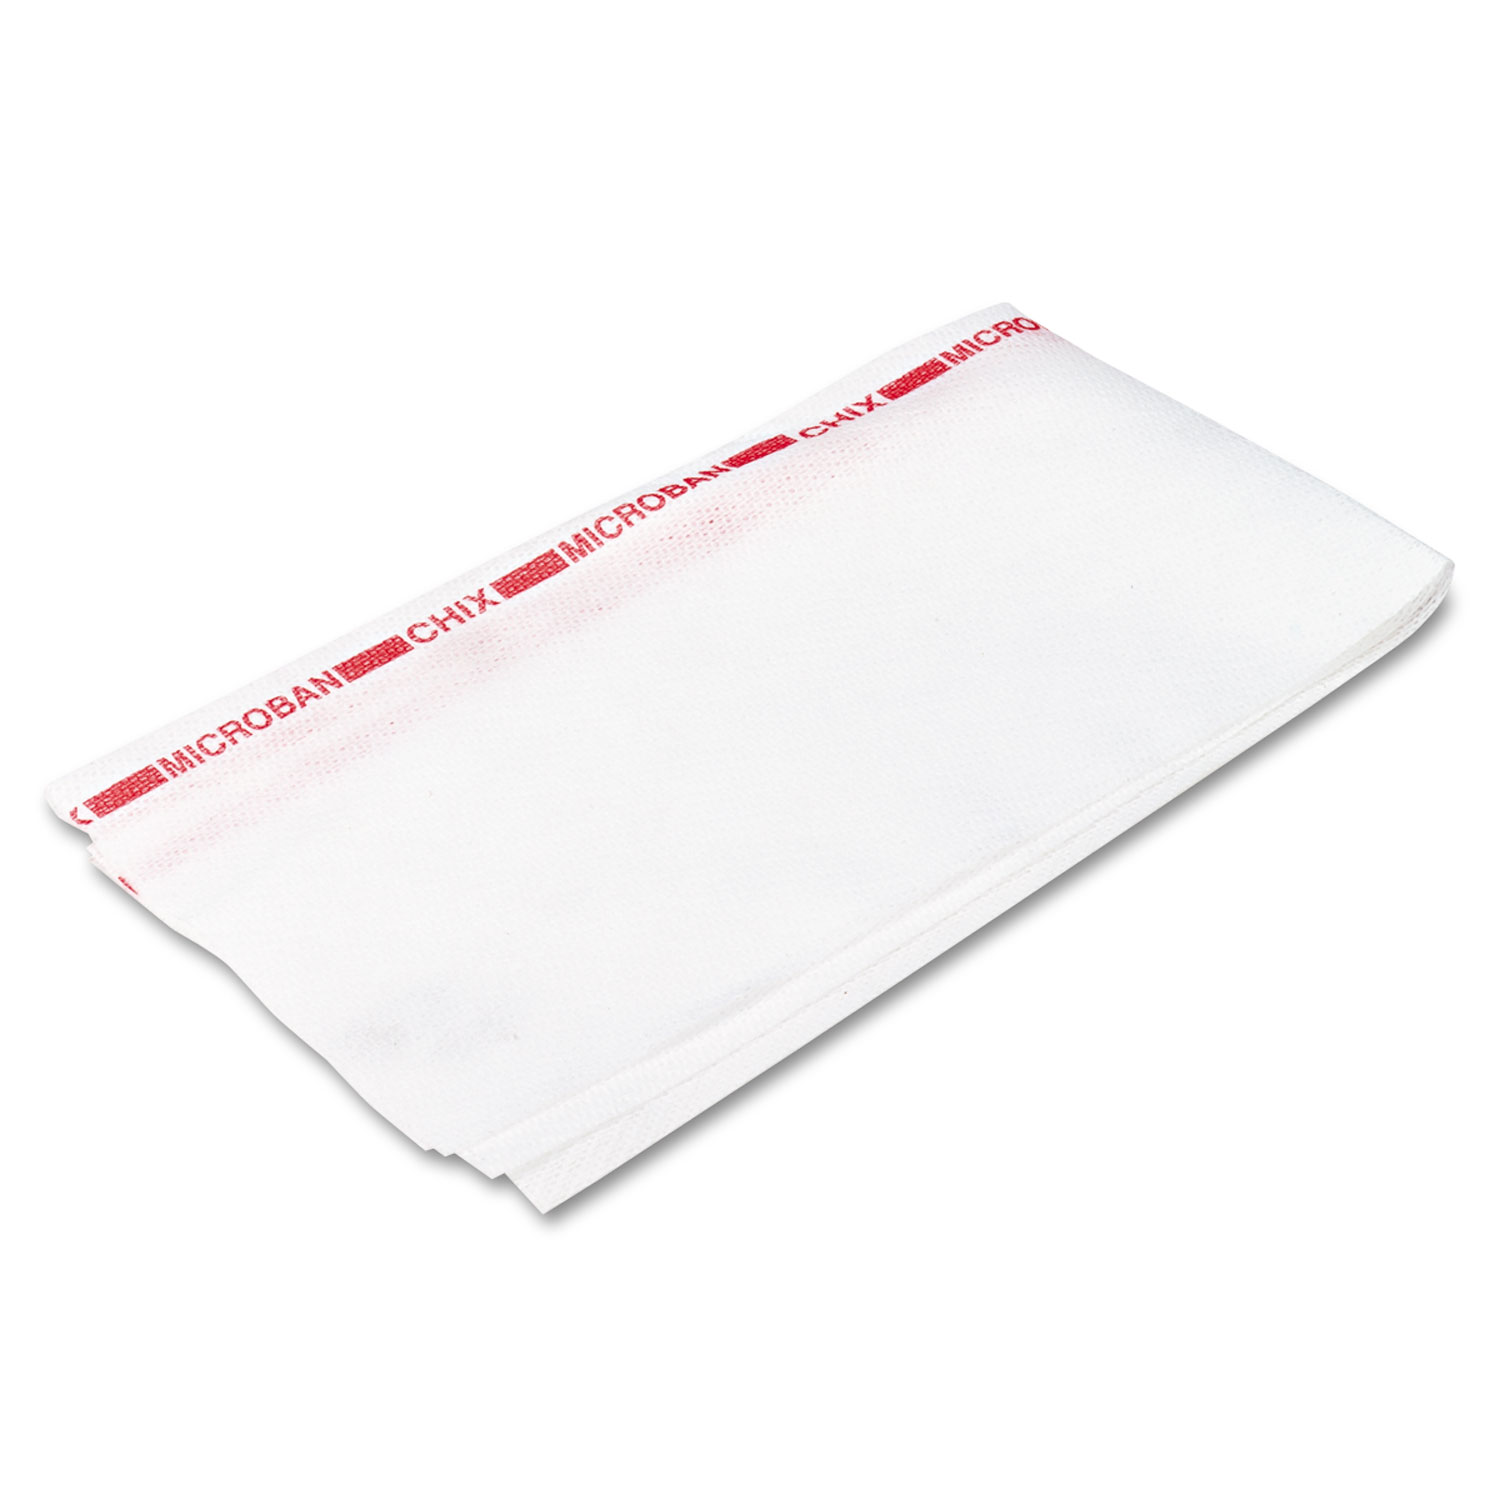  Chix 8250 Reusable Food Service Towels, Fabric, 13 x 24, White, 150/Carton (CHI8250) 